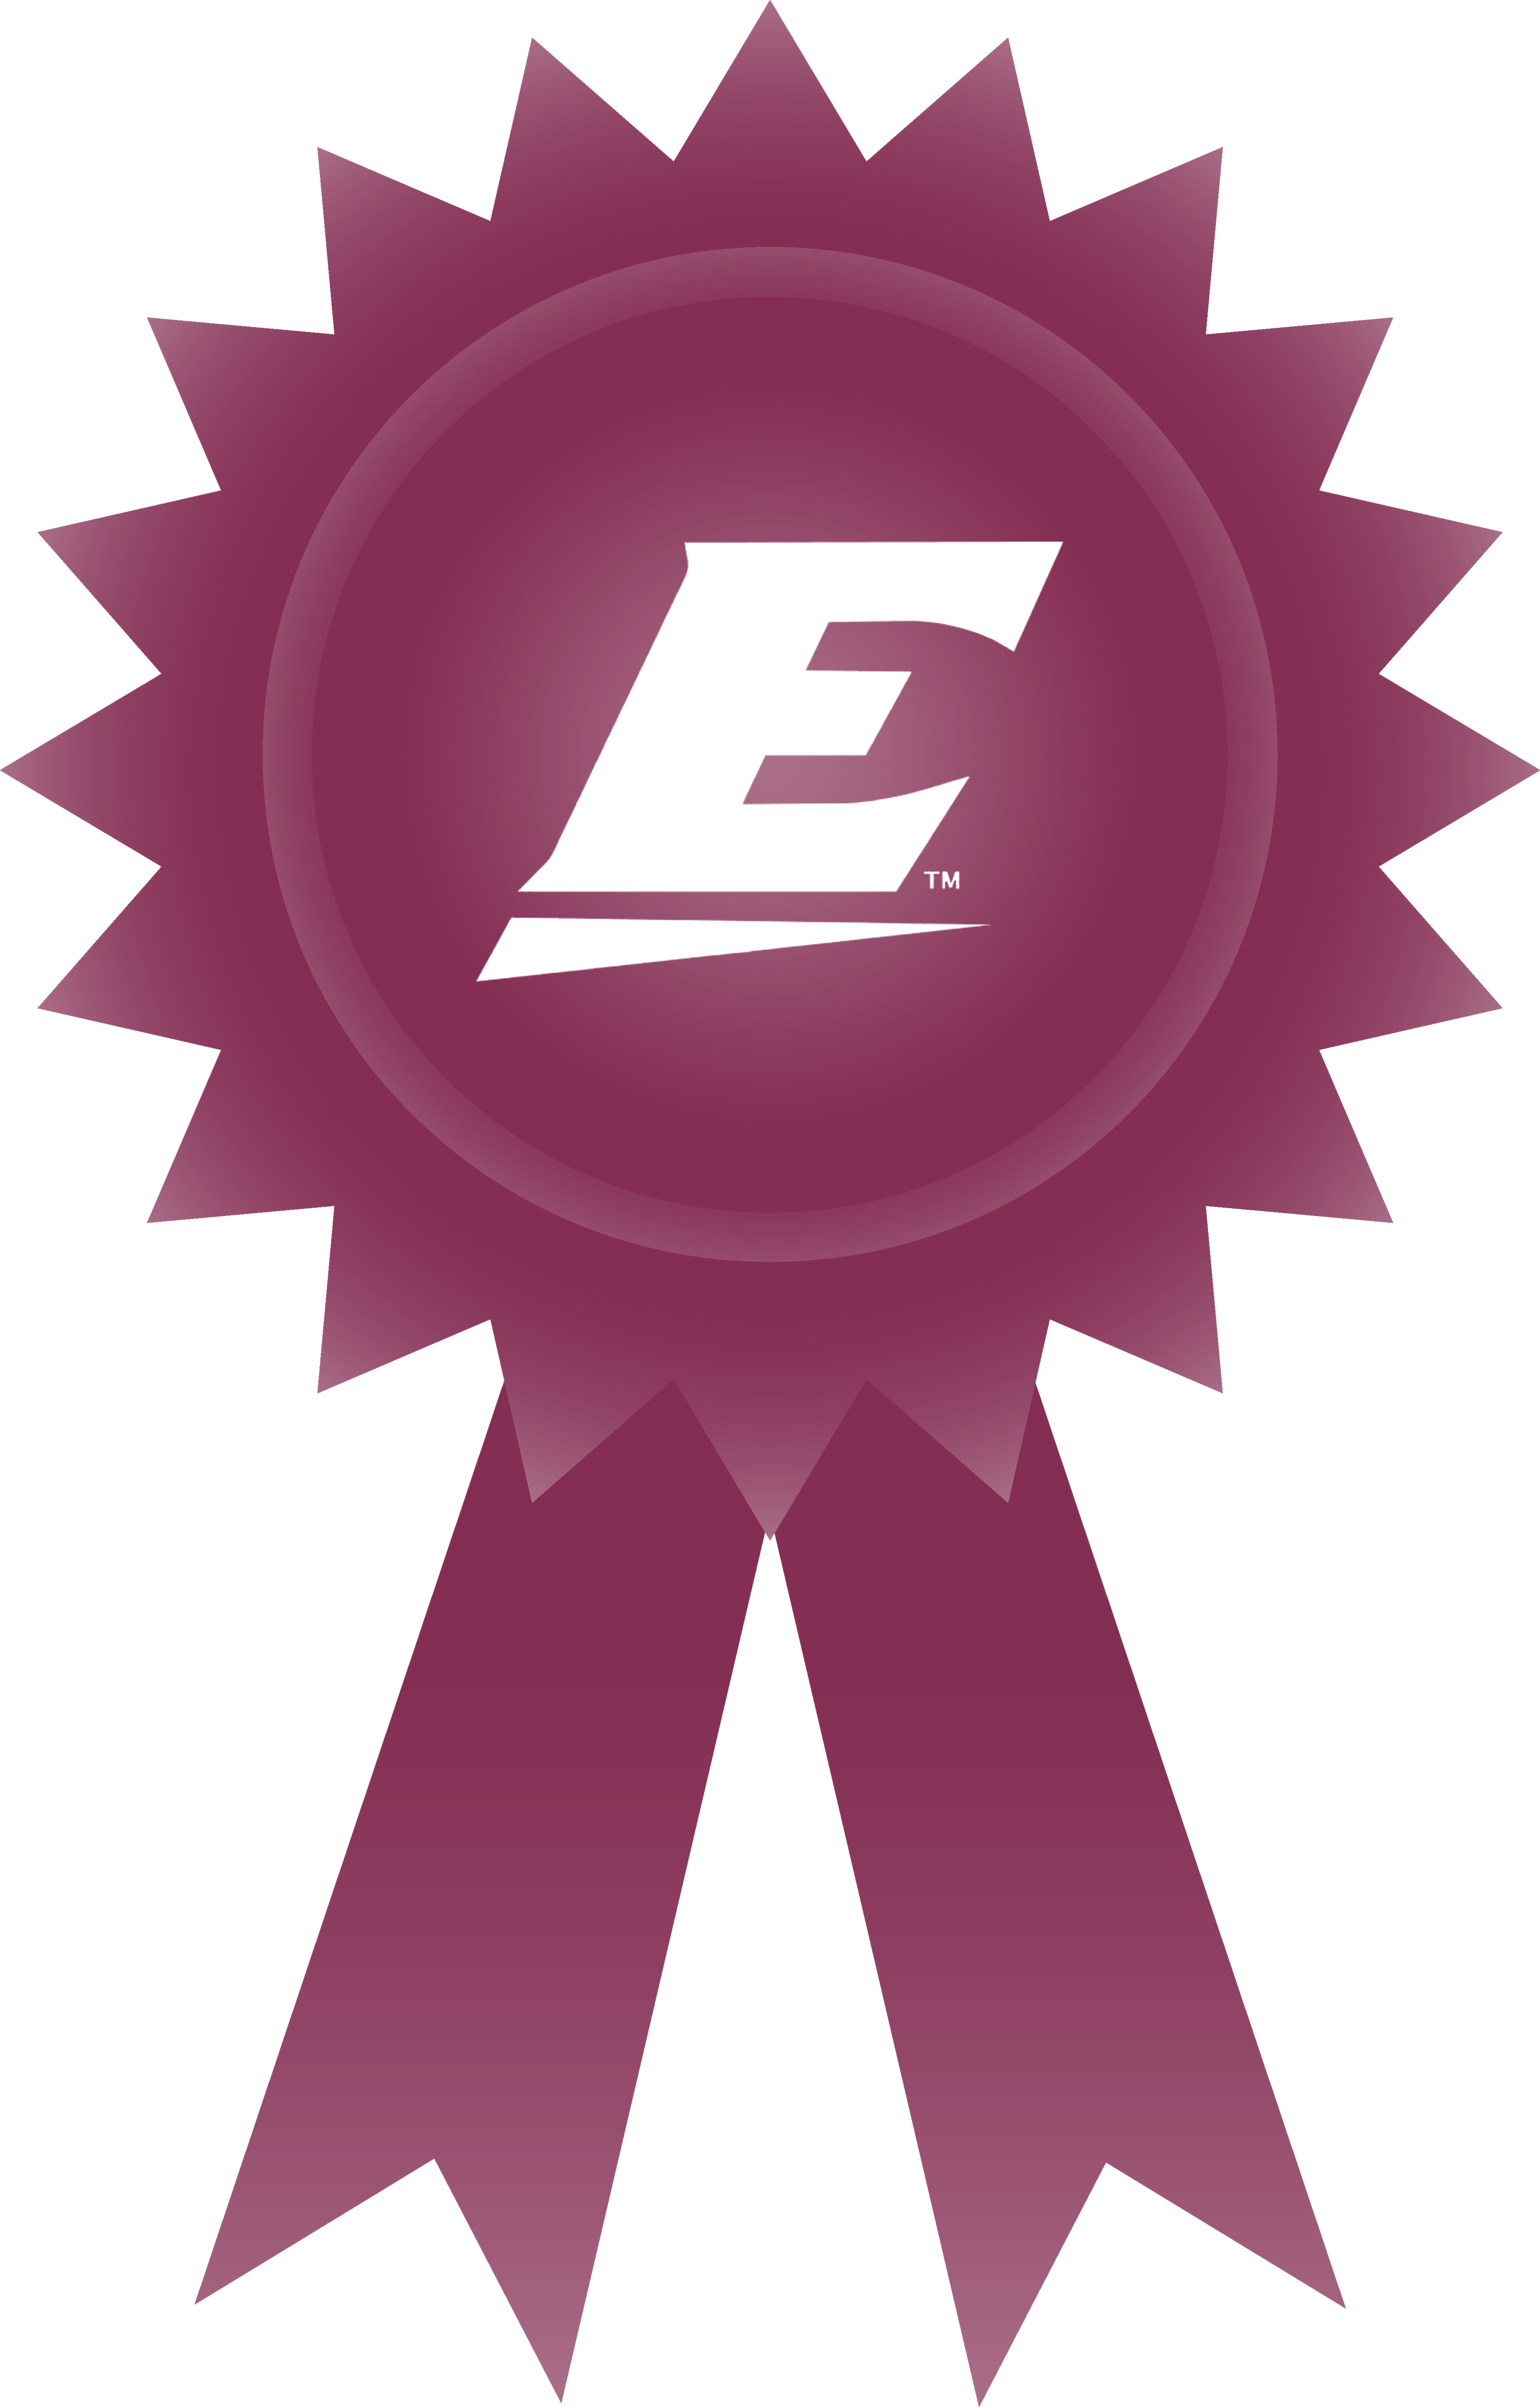 Download Eku Alumni Awards - Transparent Background Red Ribbon Award PNG  Image with No Background 